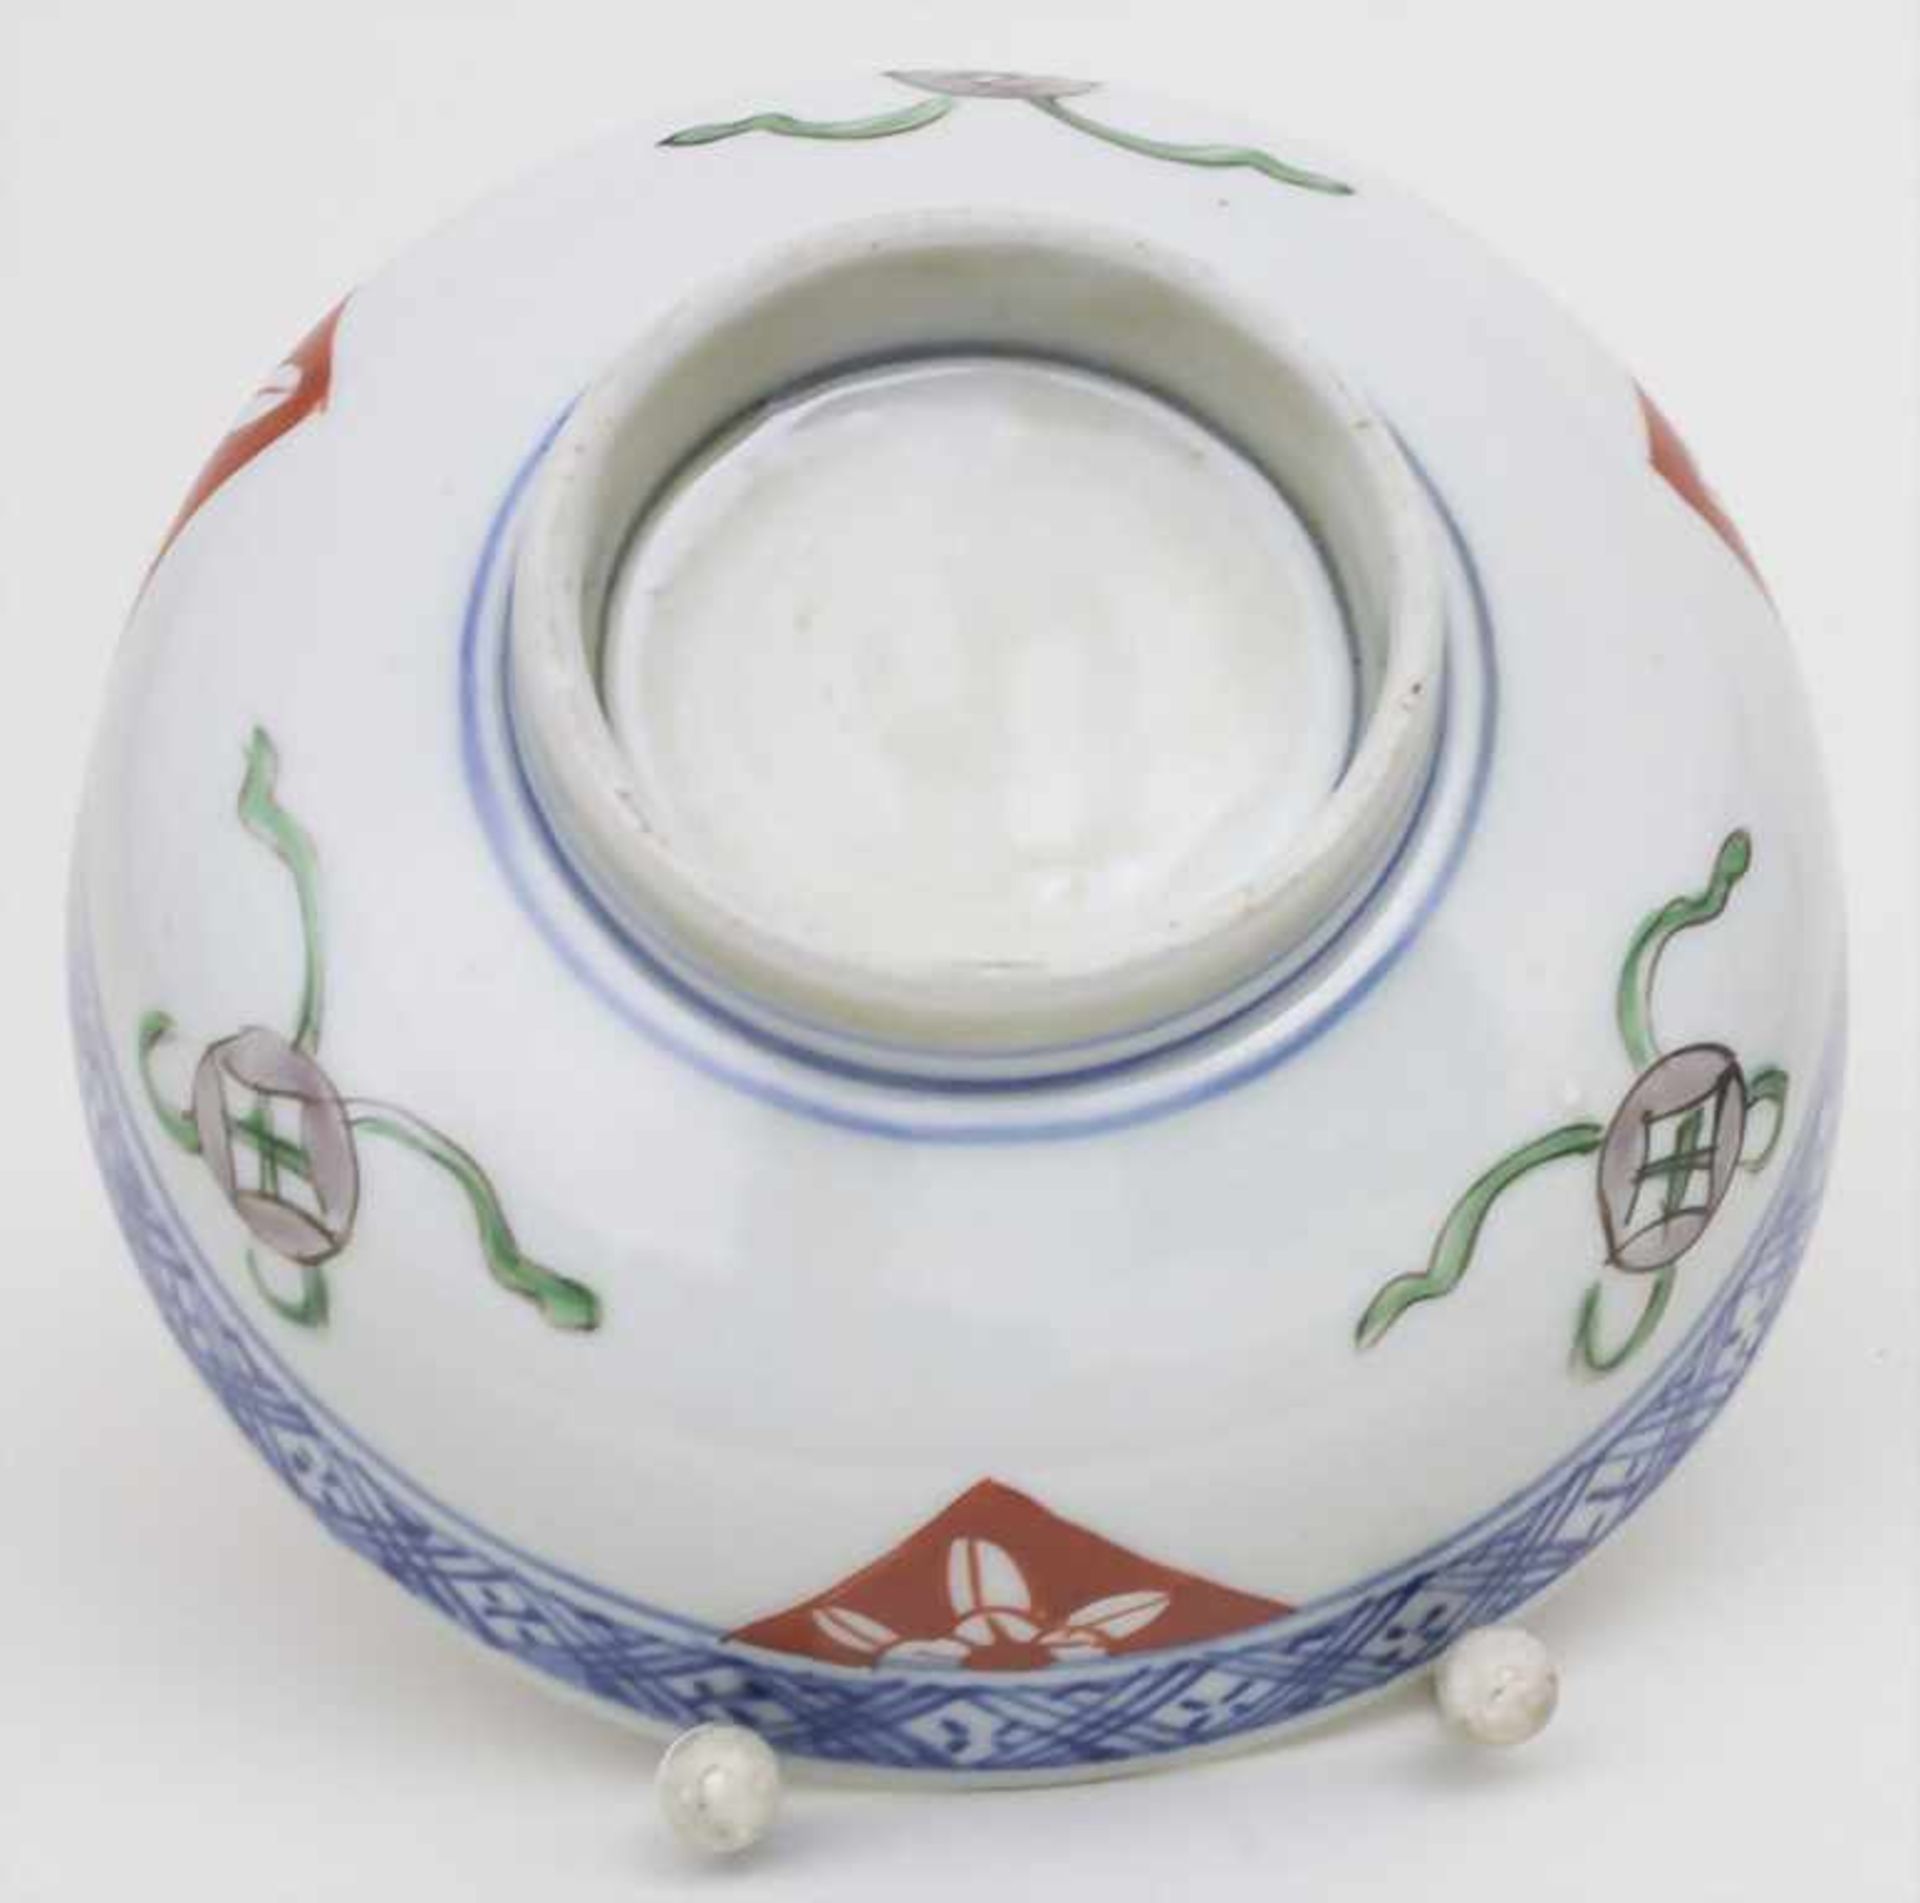 2 Imari-Schalen / Two Imari bowls, Japan, 18./19. Jh.Material: Porzellan, mit Emailfarben bemalt, - Bild 4 aus 5